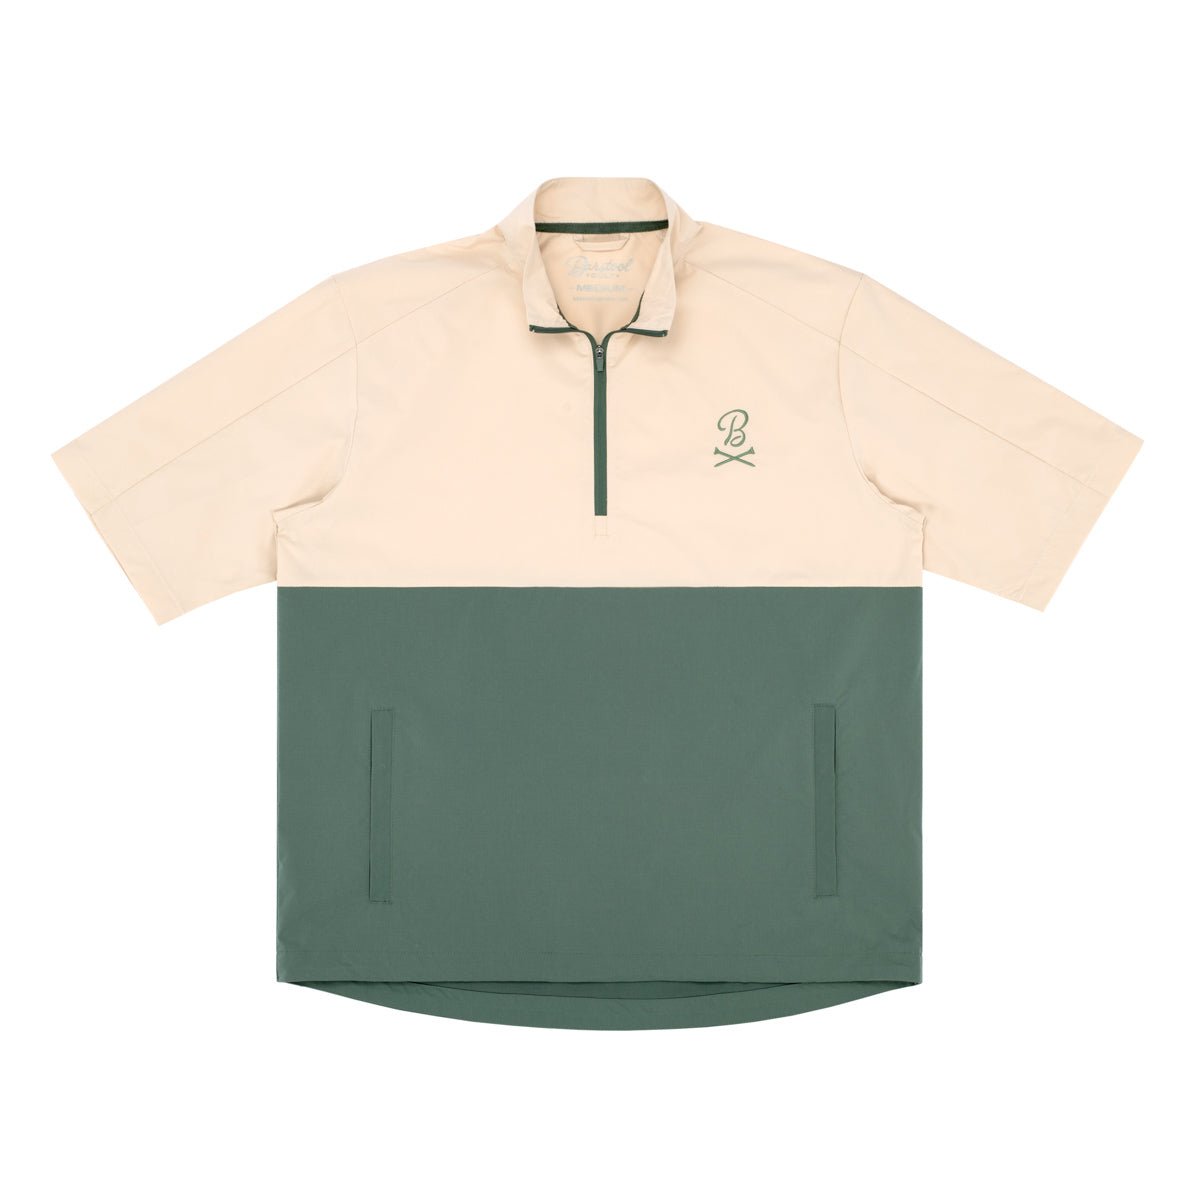 Barstool Golf Crossed Tees Short Sleeve Windbreaker-Jackets-Fore Play-Green-S-Barstool Sports